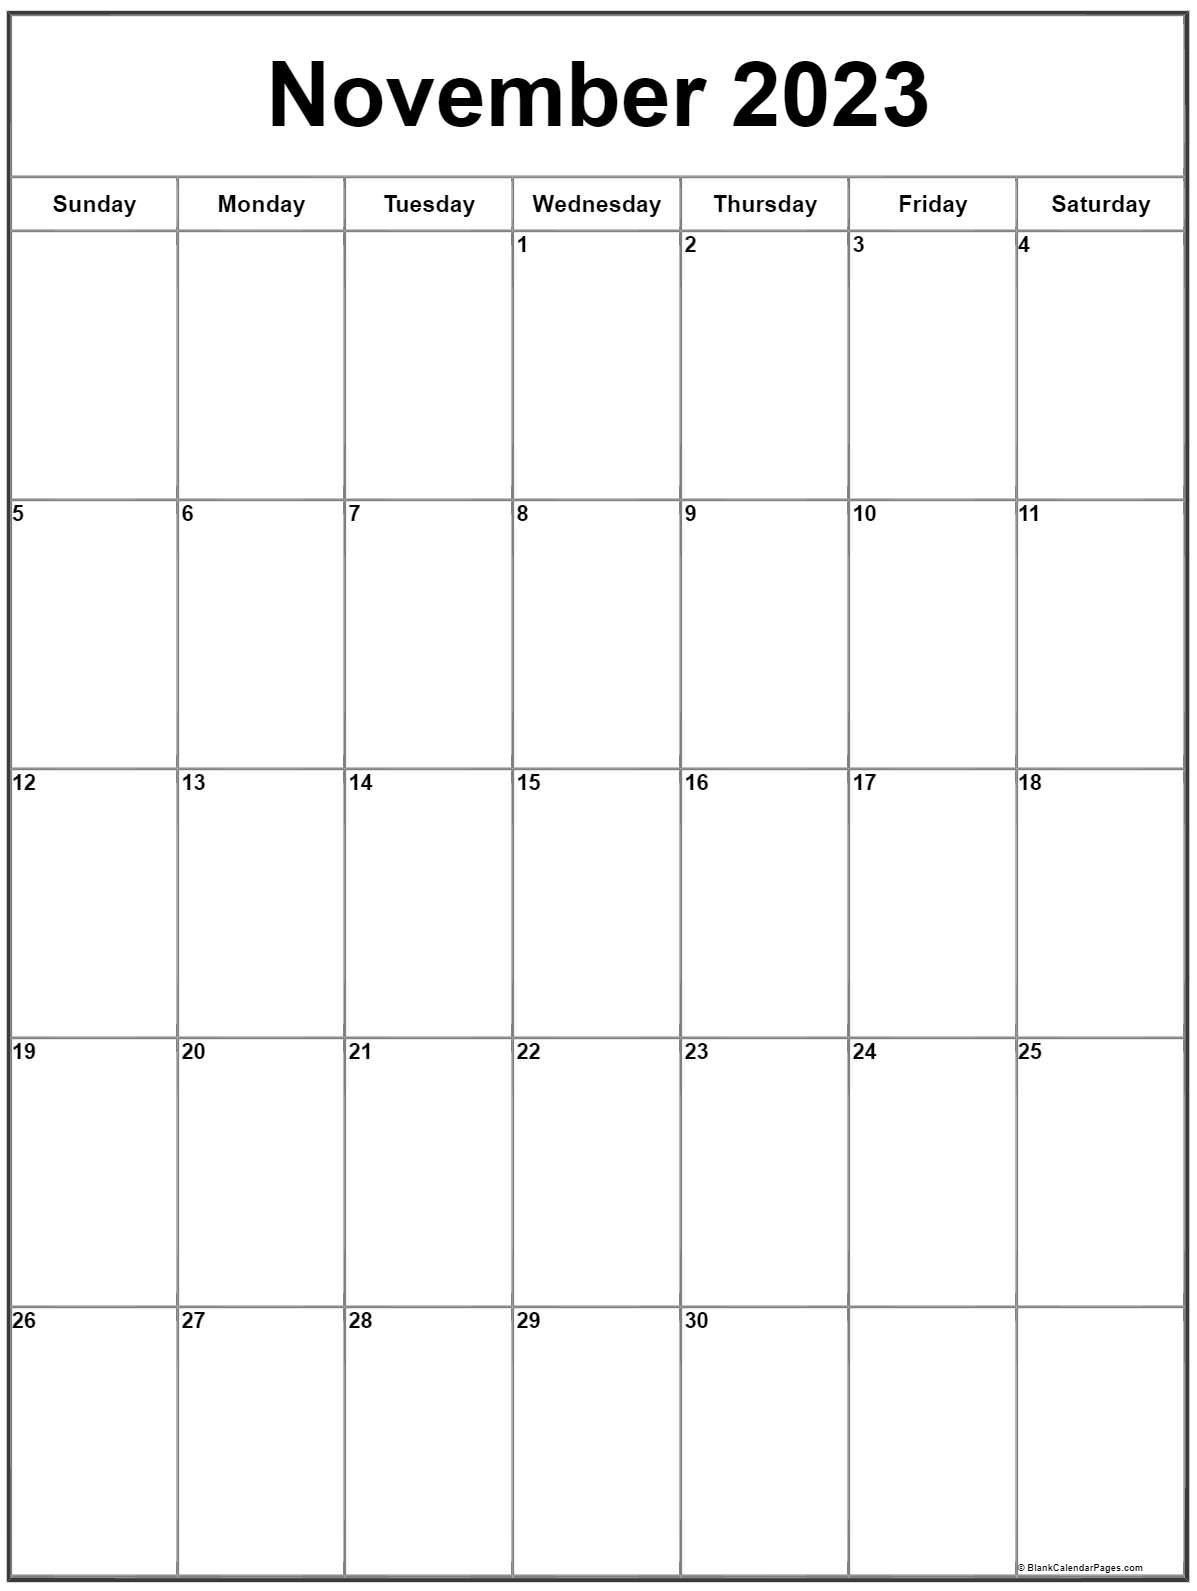 november-2023-calendar-vertical-get-calender-2023-update